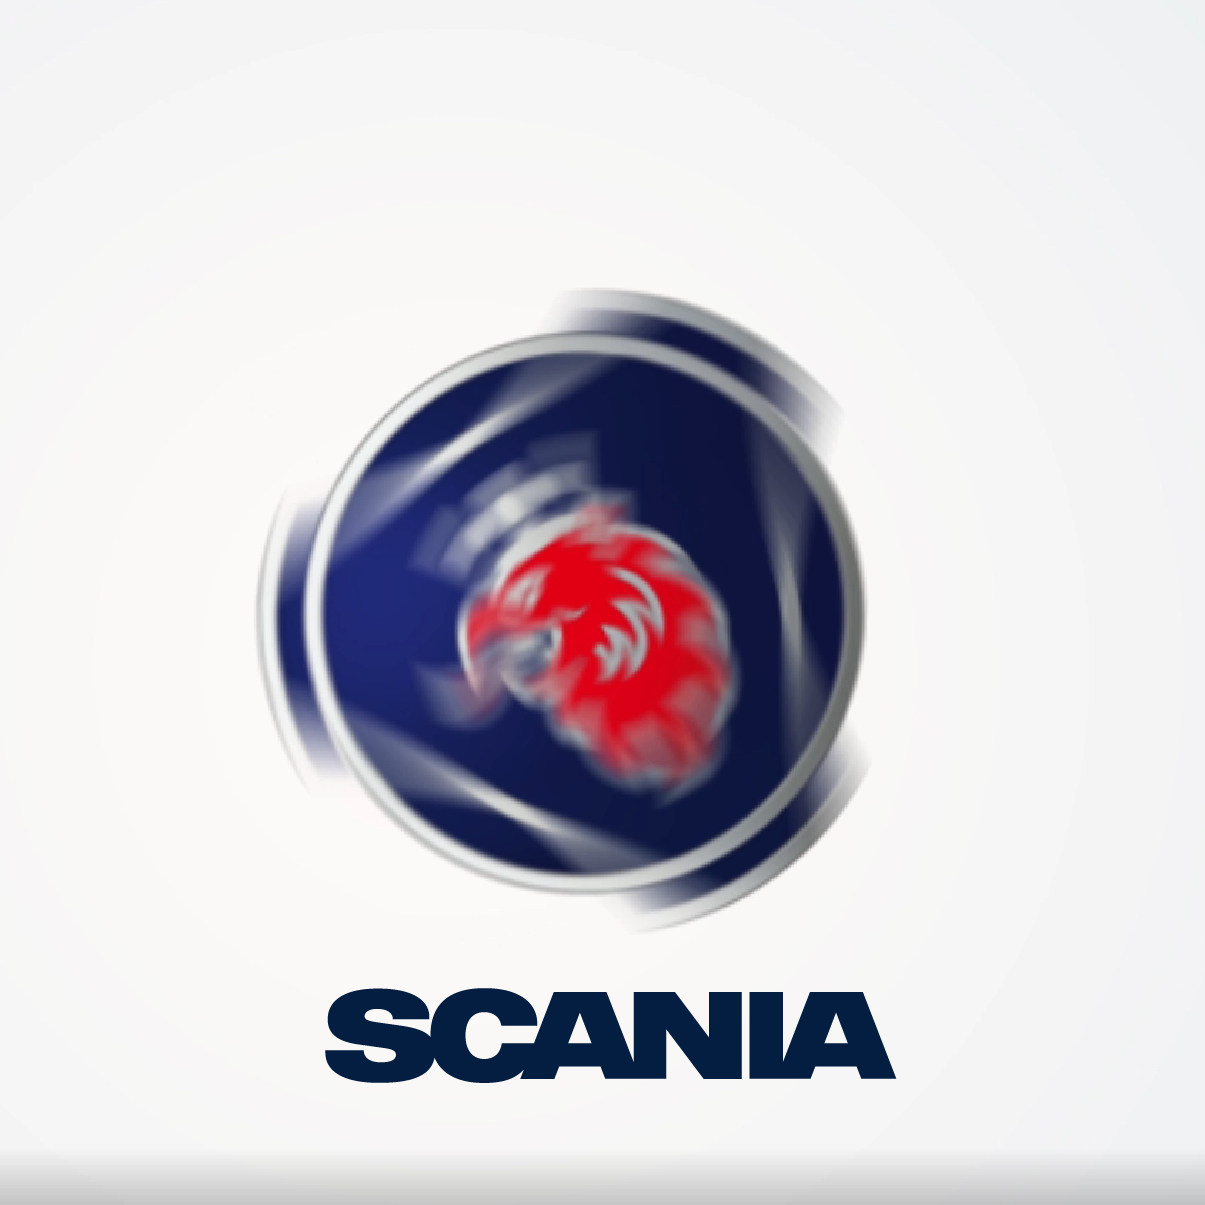 Swirling Scania symbol and wordmark